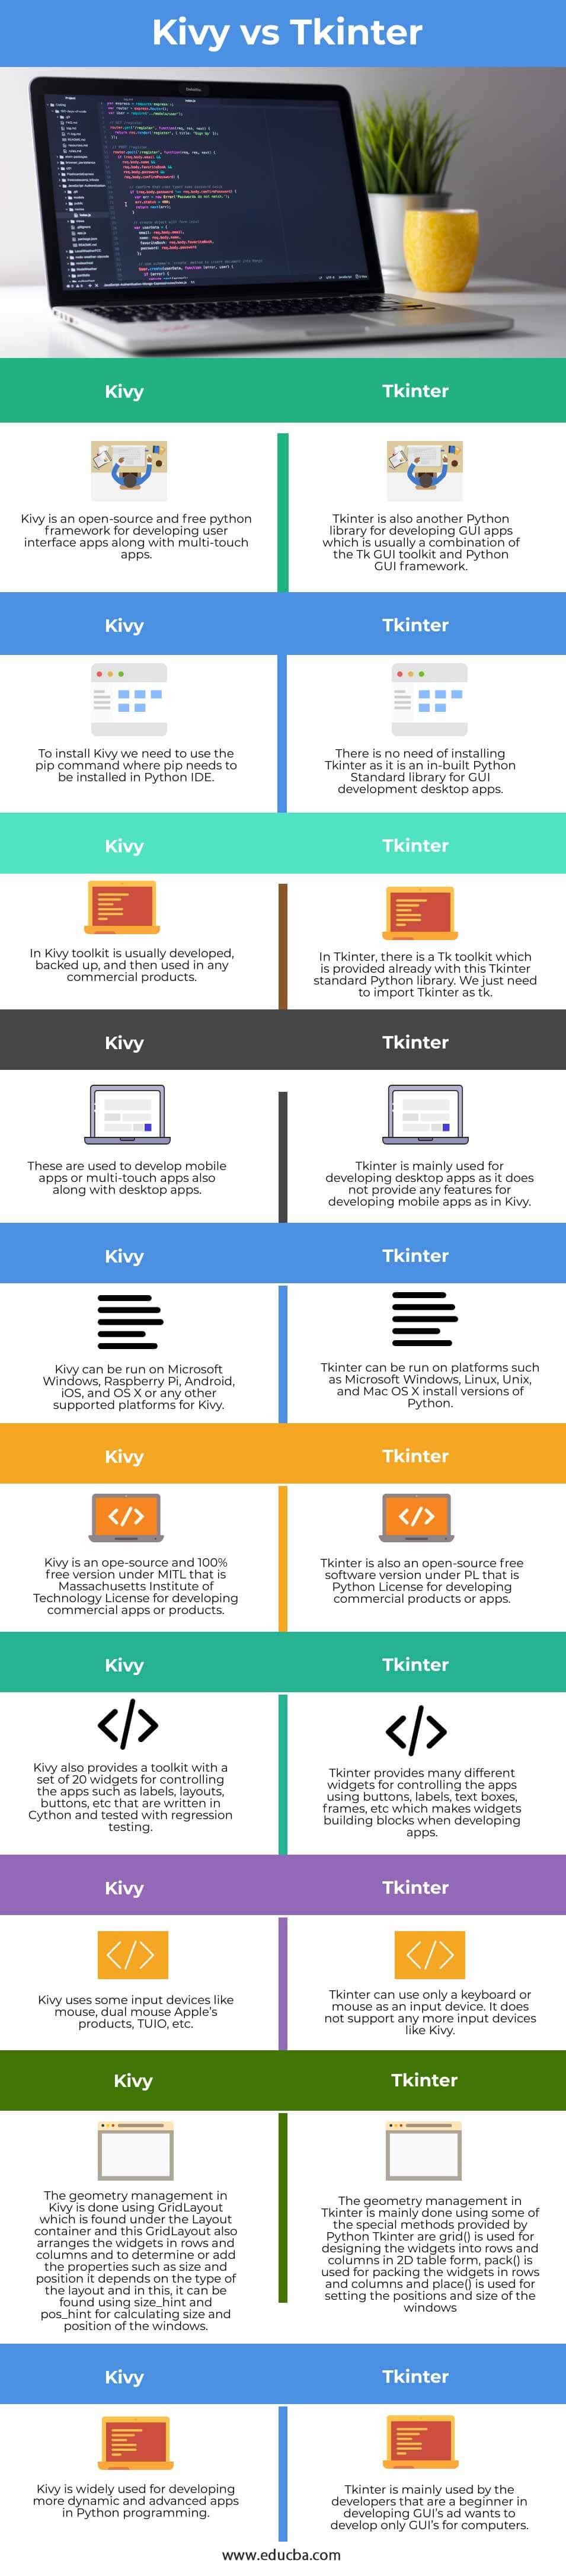 Kivy-vs-Tkinter-info